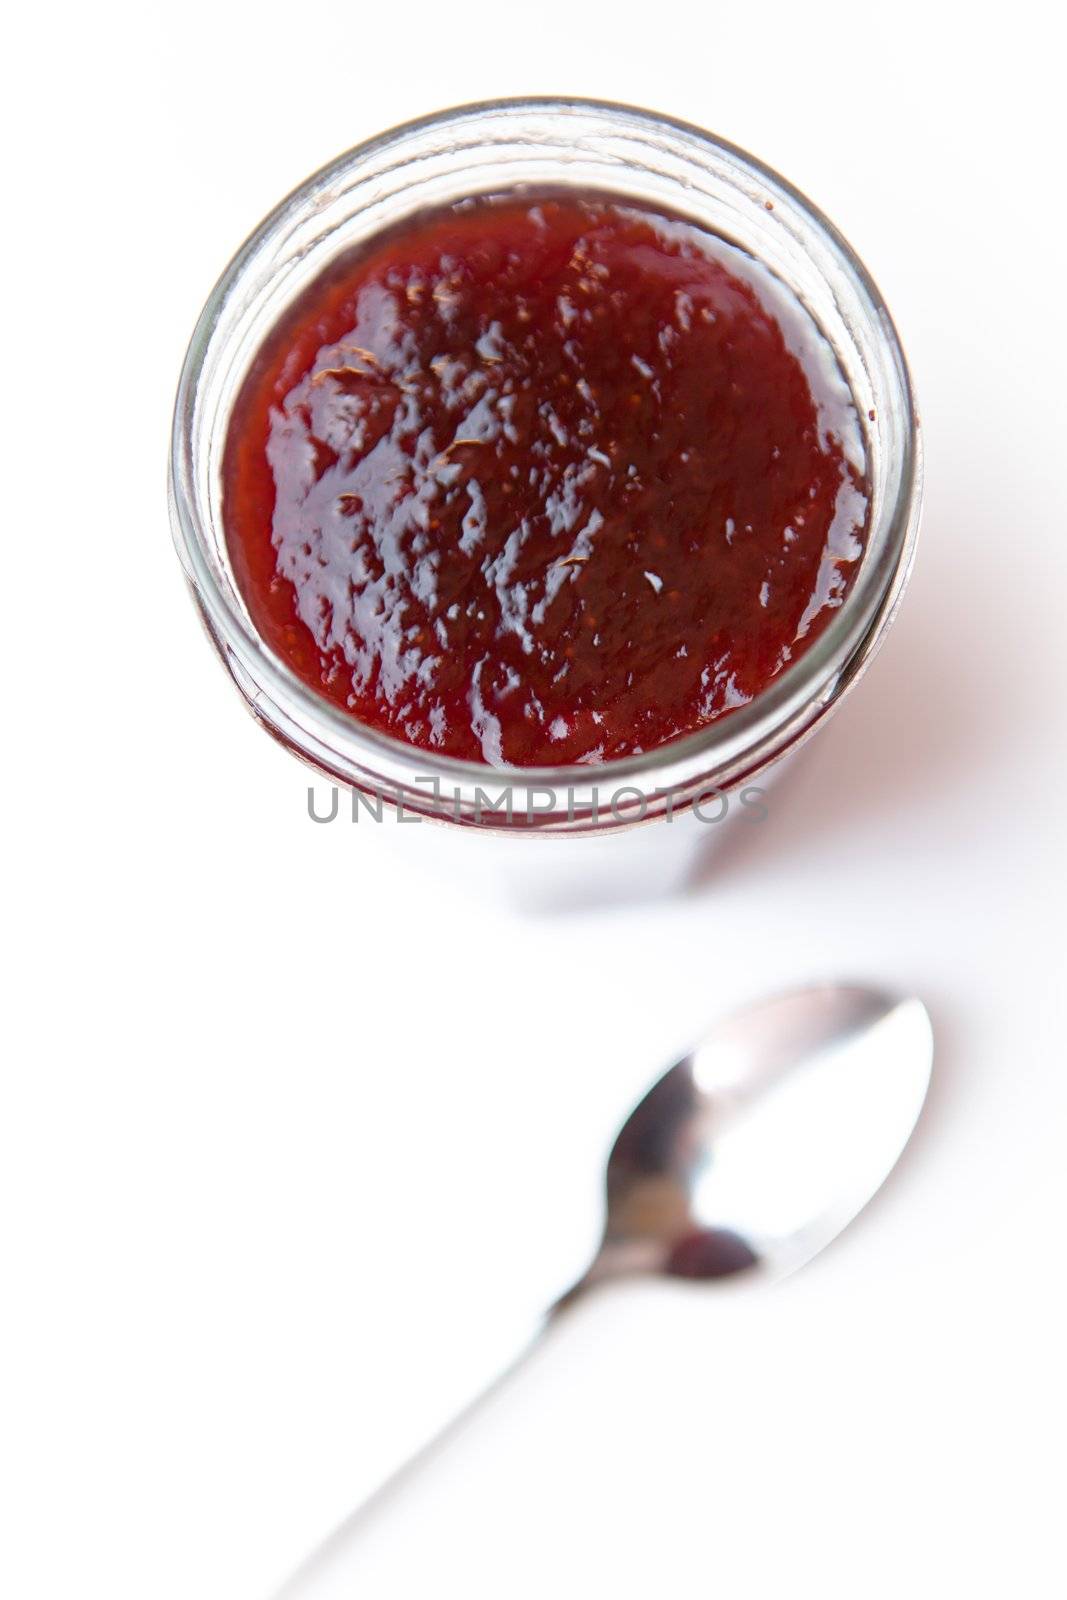 Jar of jam and spoon by Wavebreakmedia